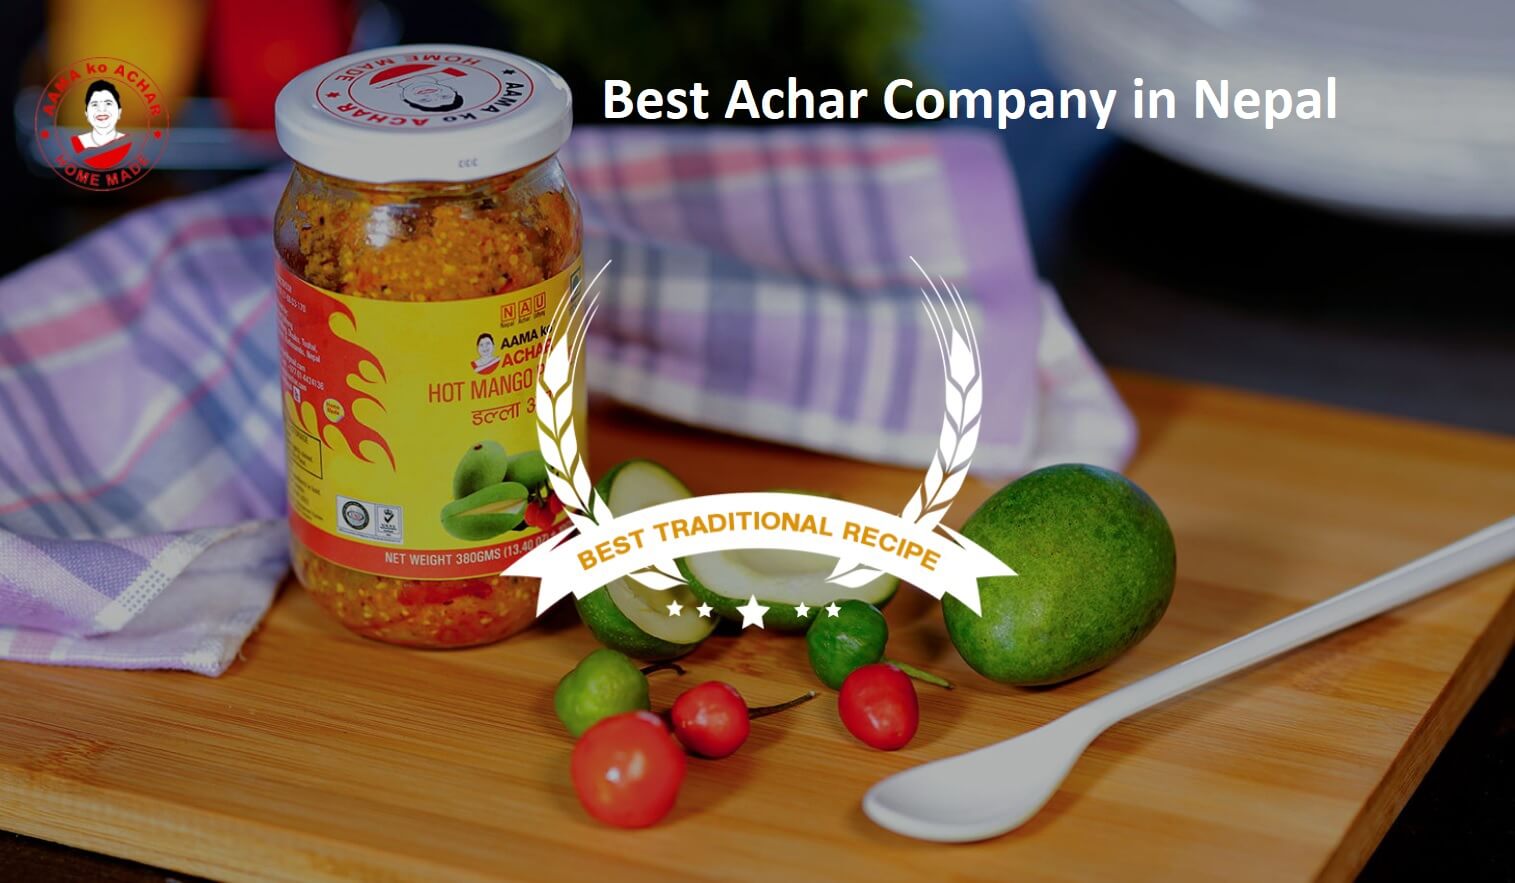 Top 4 Achar Company in Nepal